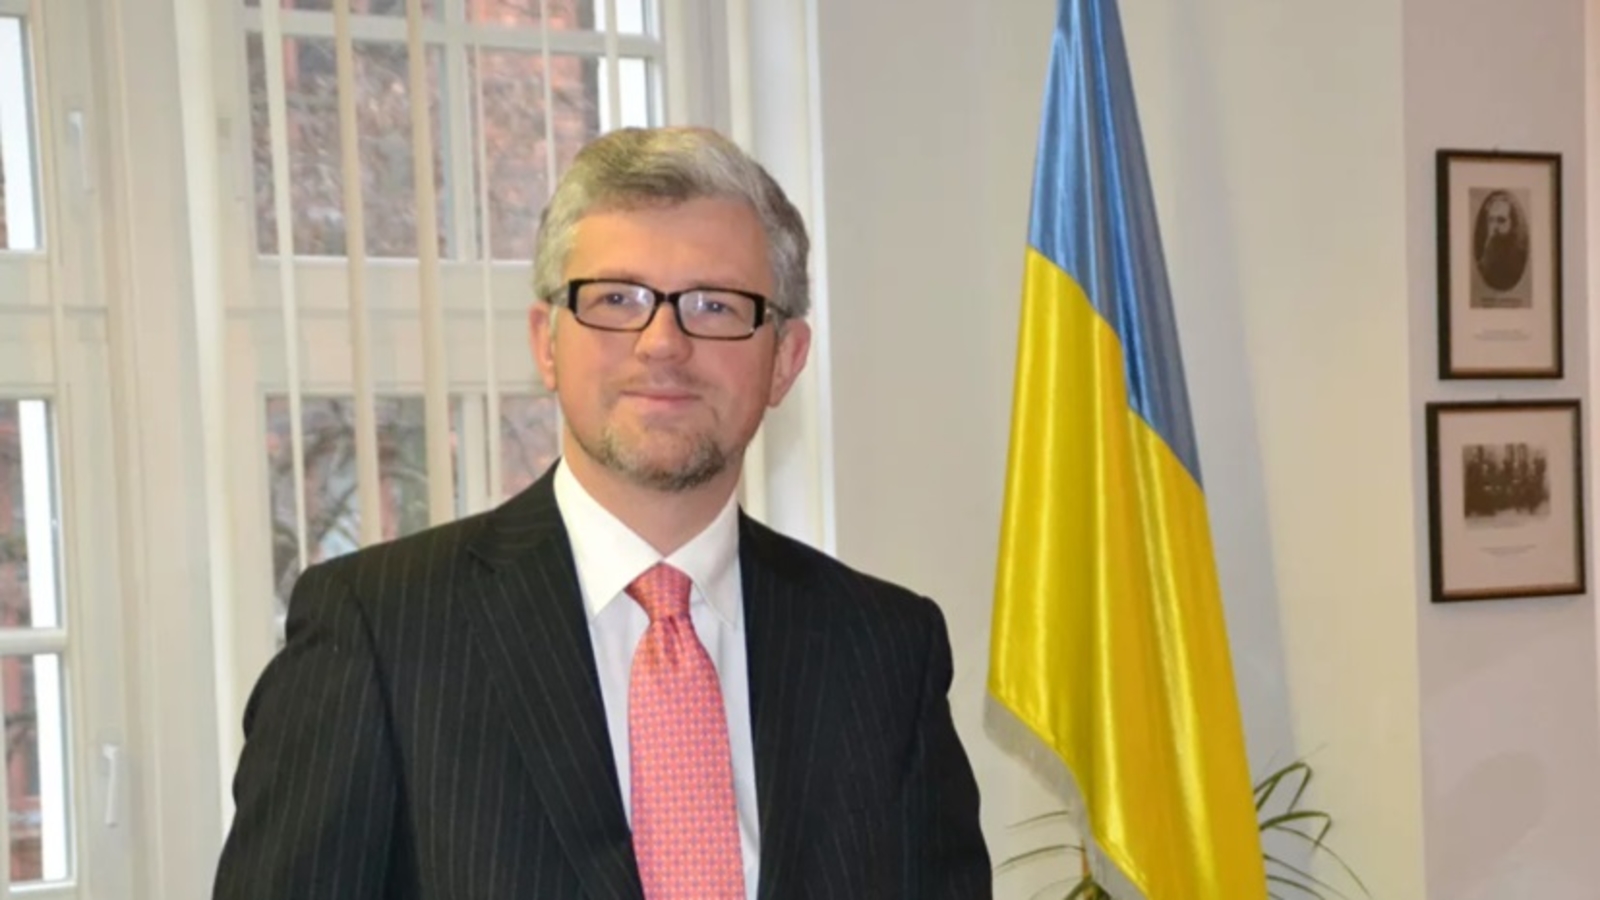 посол германии на украине